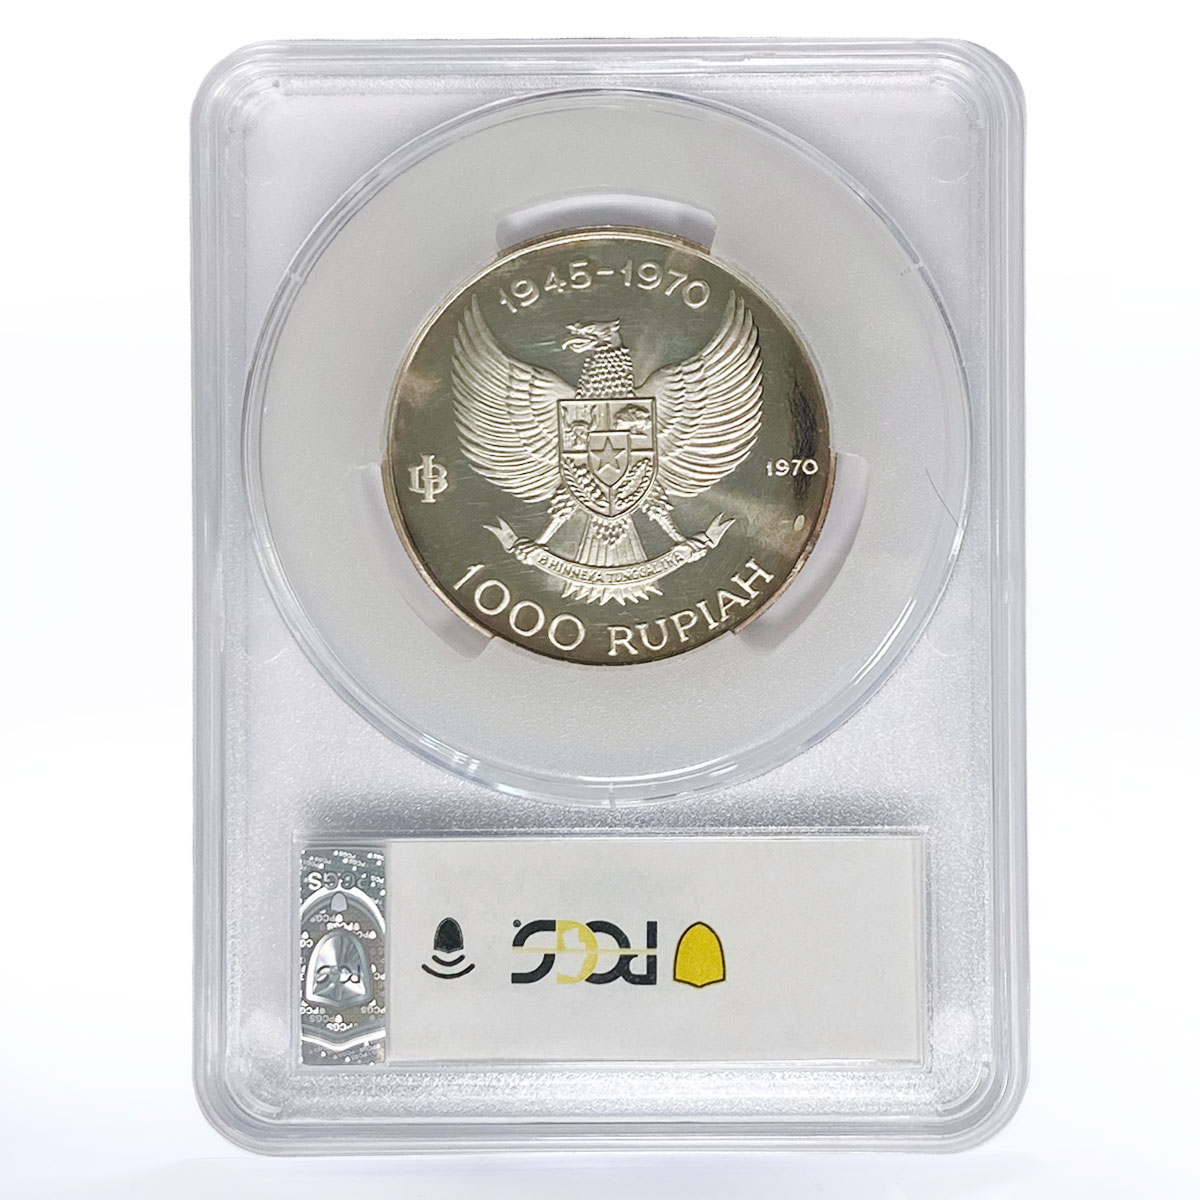 Indonesia 1000 rupiah General Sudirman PR63 PCGS proof silver coin 1970